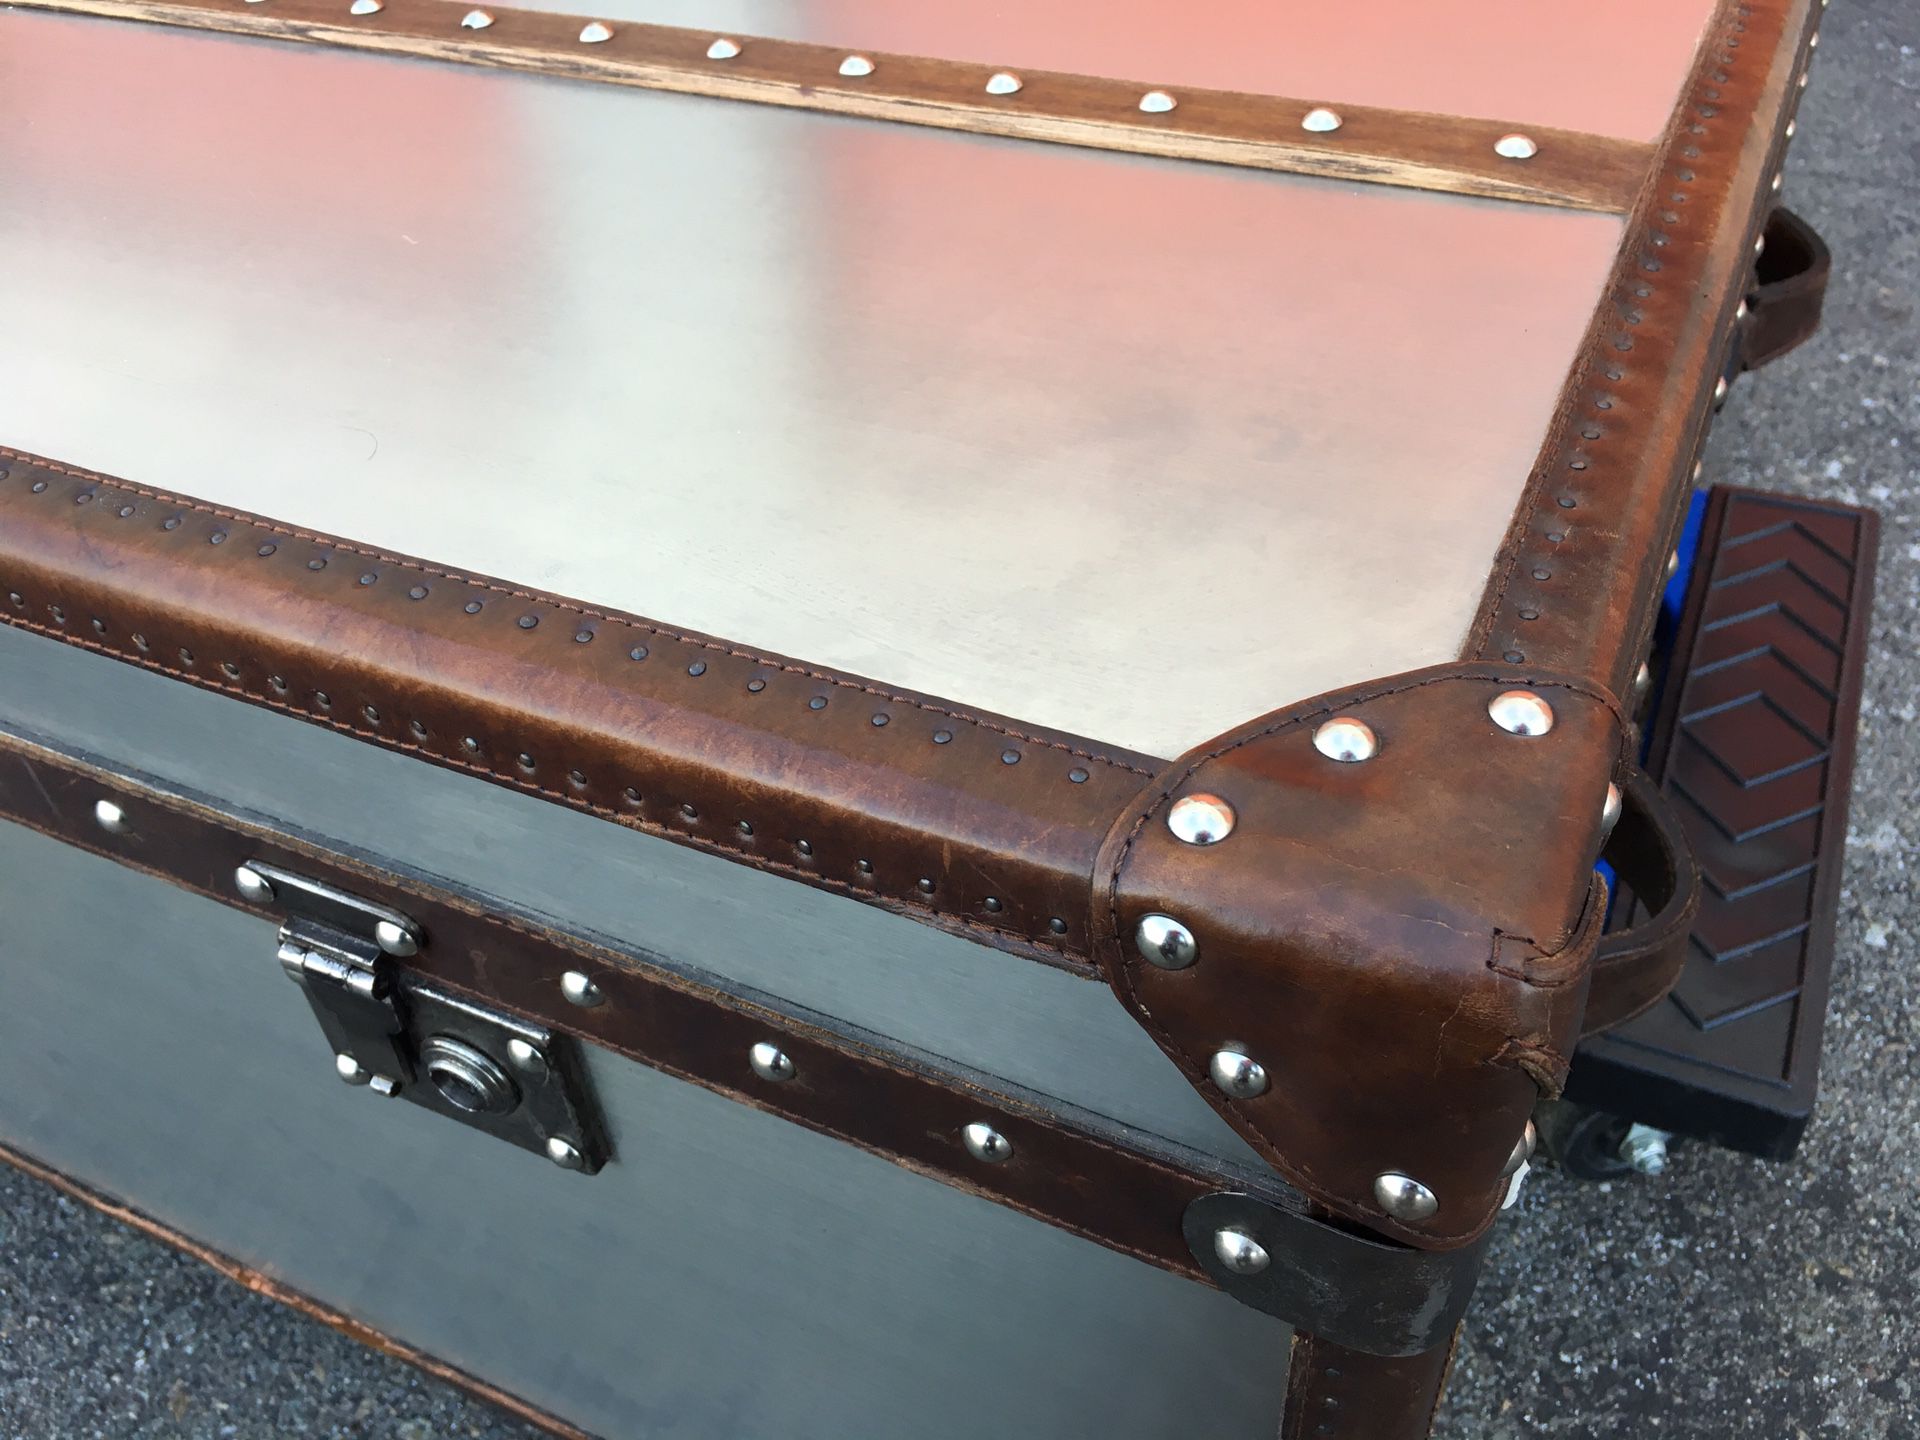 Restoration Hardware Mayfair Steamer coffee table for Sale in Monroe, WA -  OfferUp